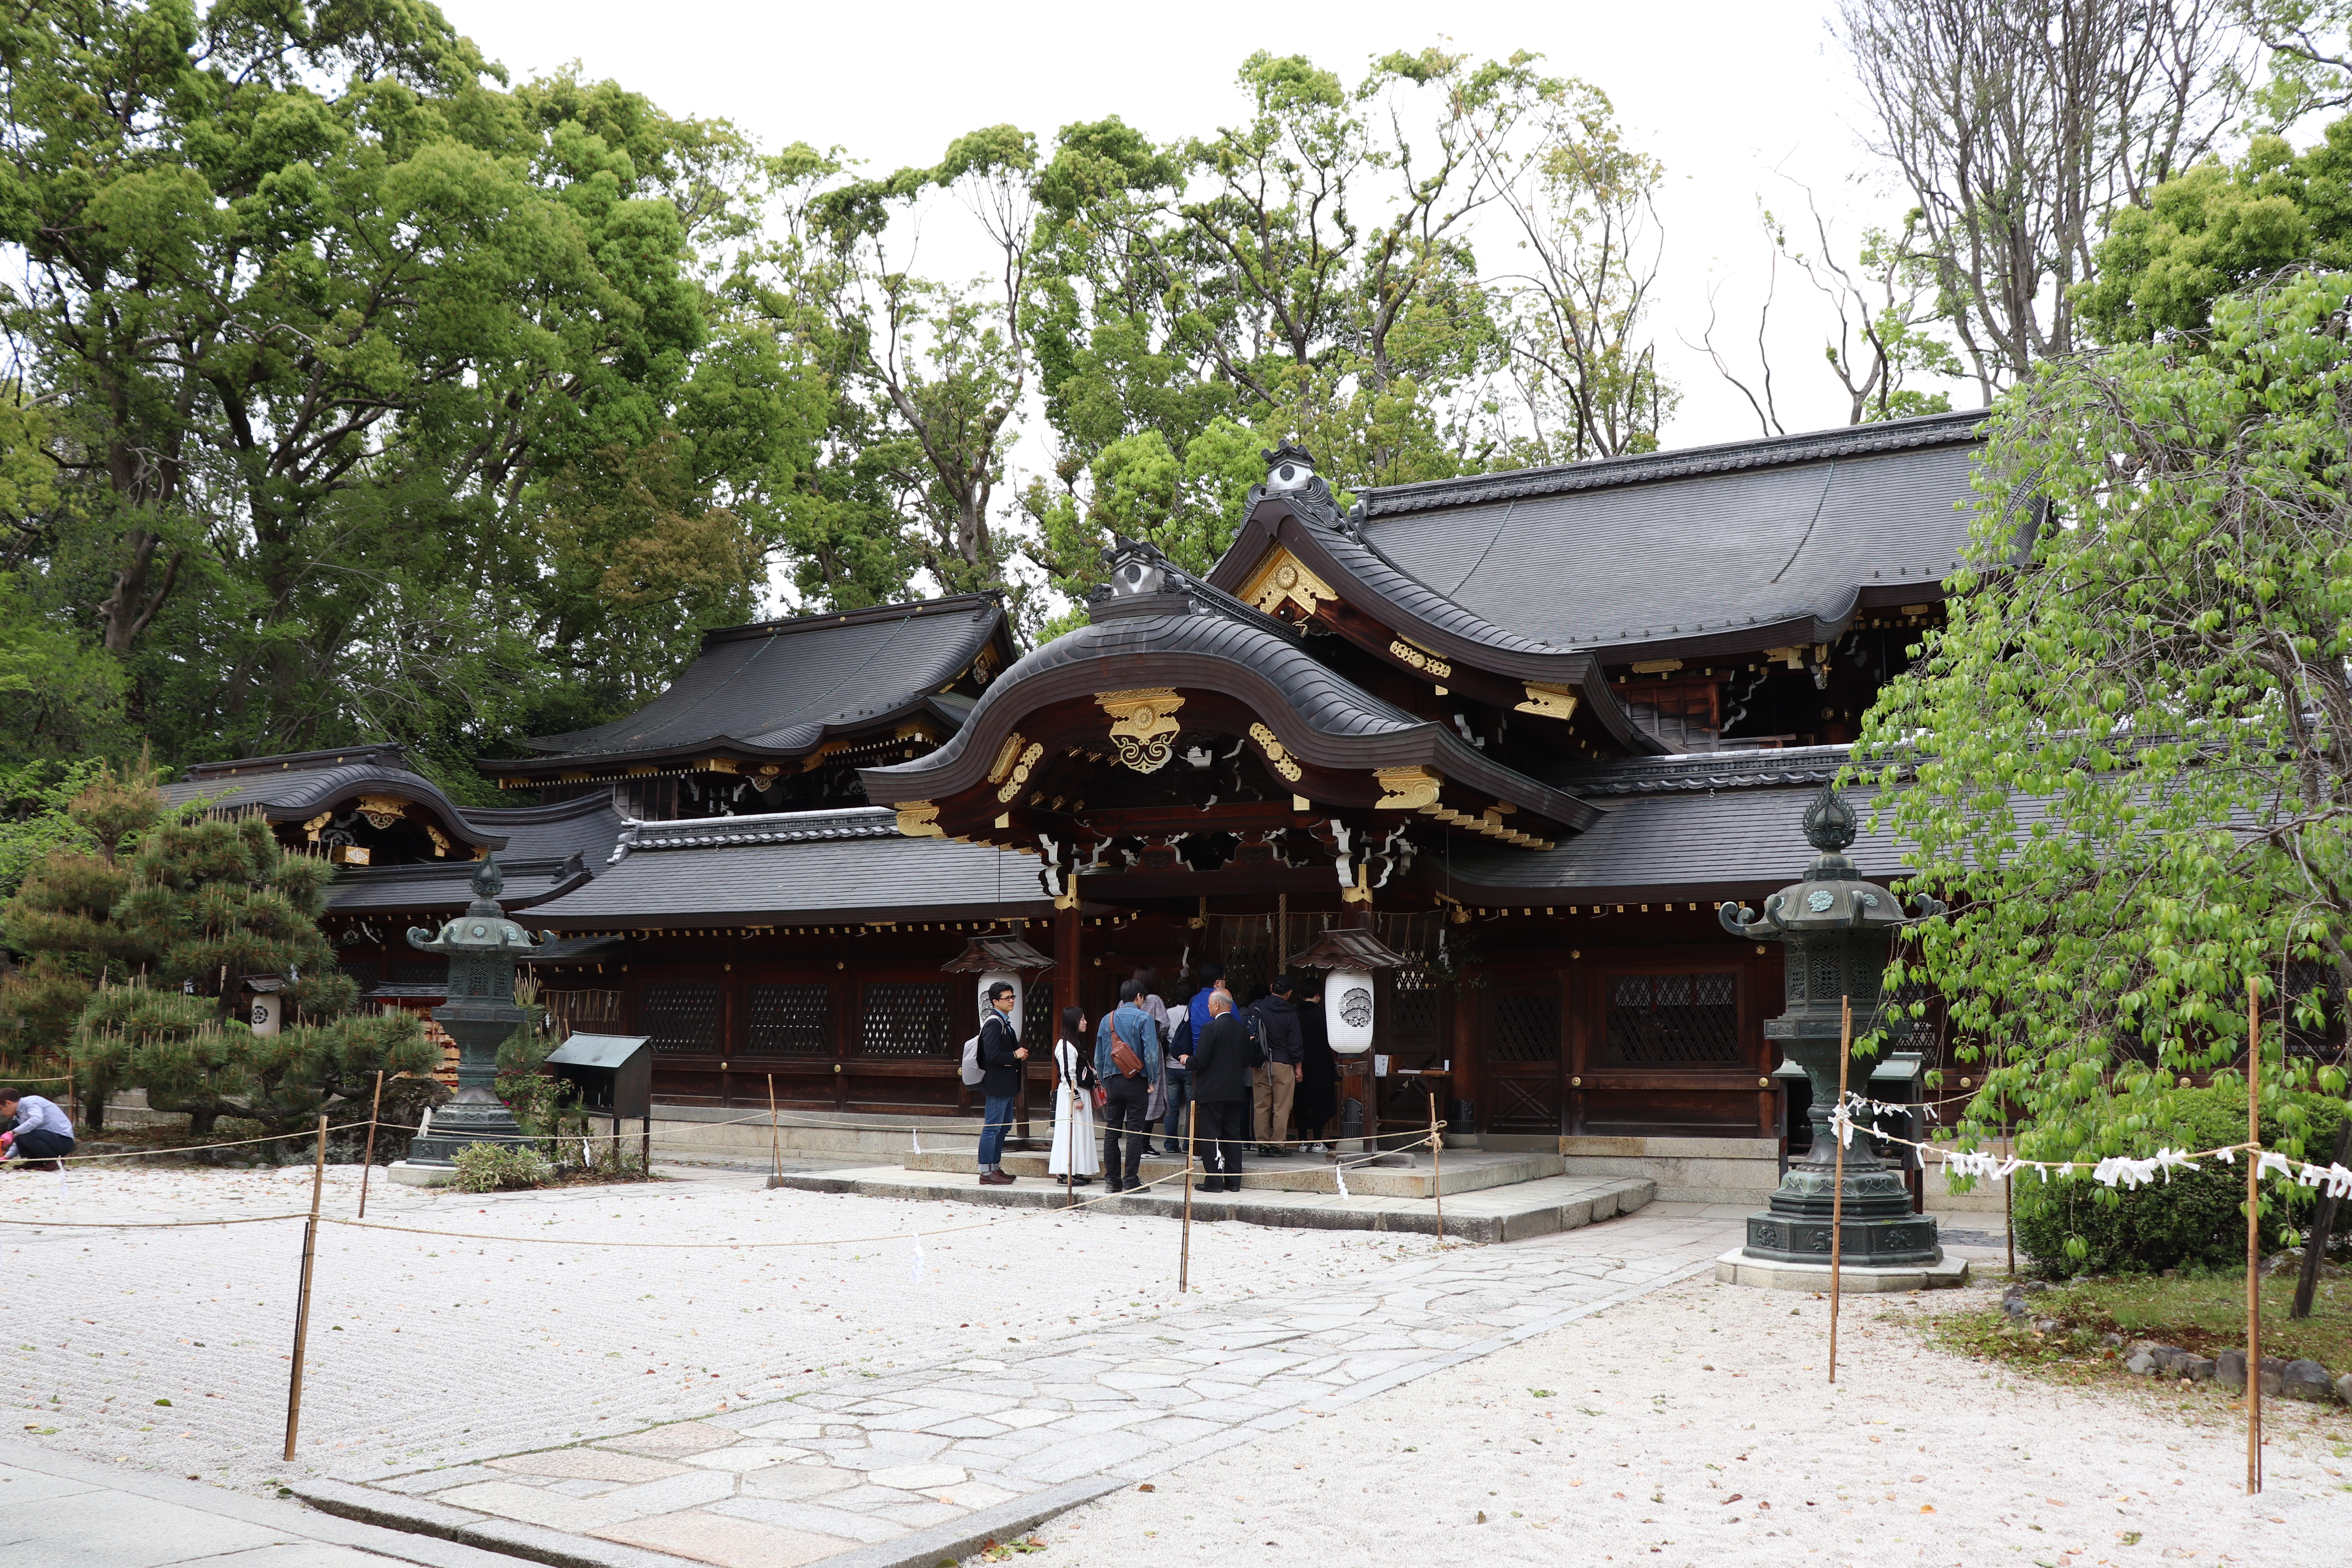 main shrine building of Imamiya Shrine in Kyoto